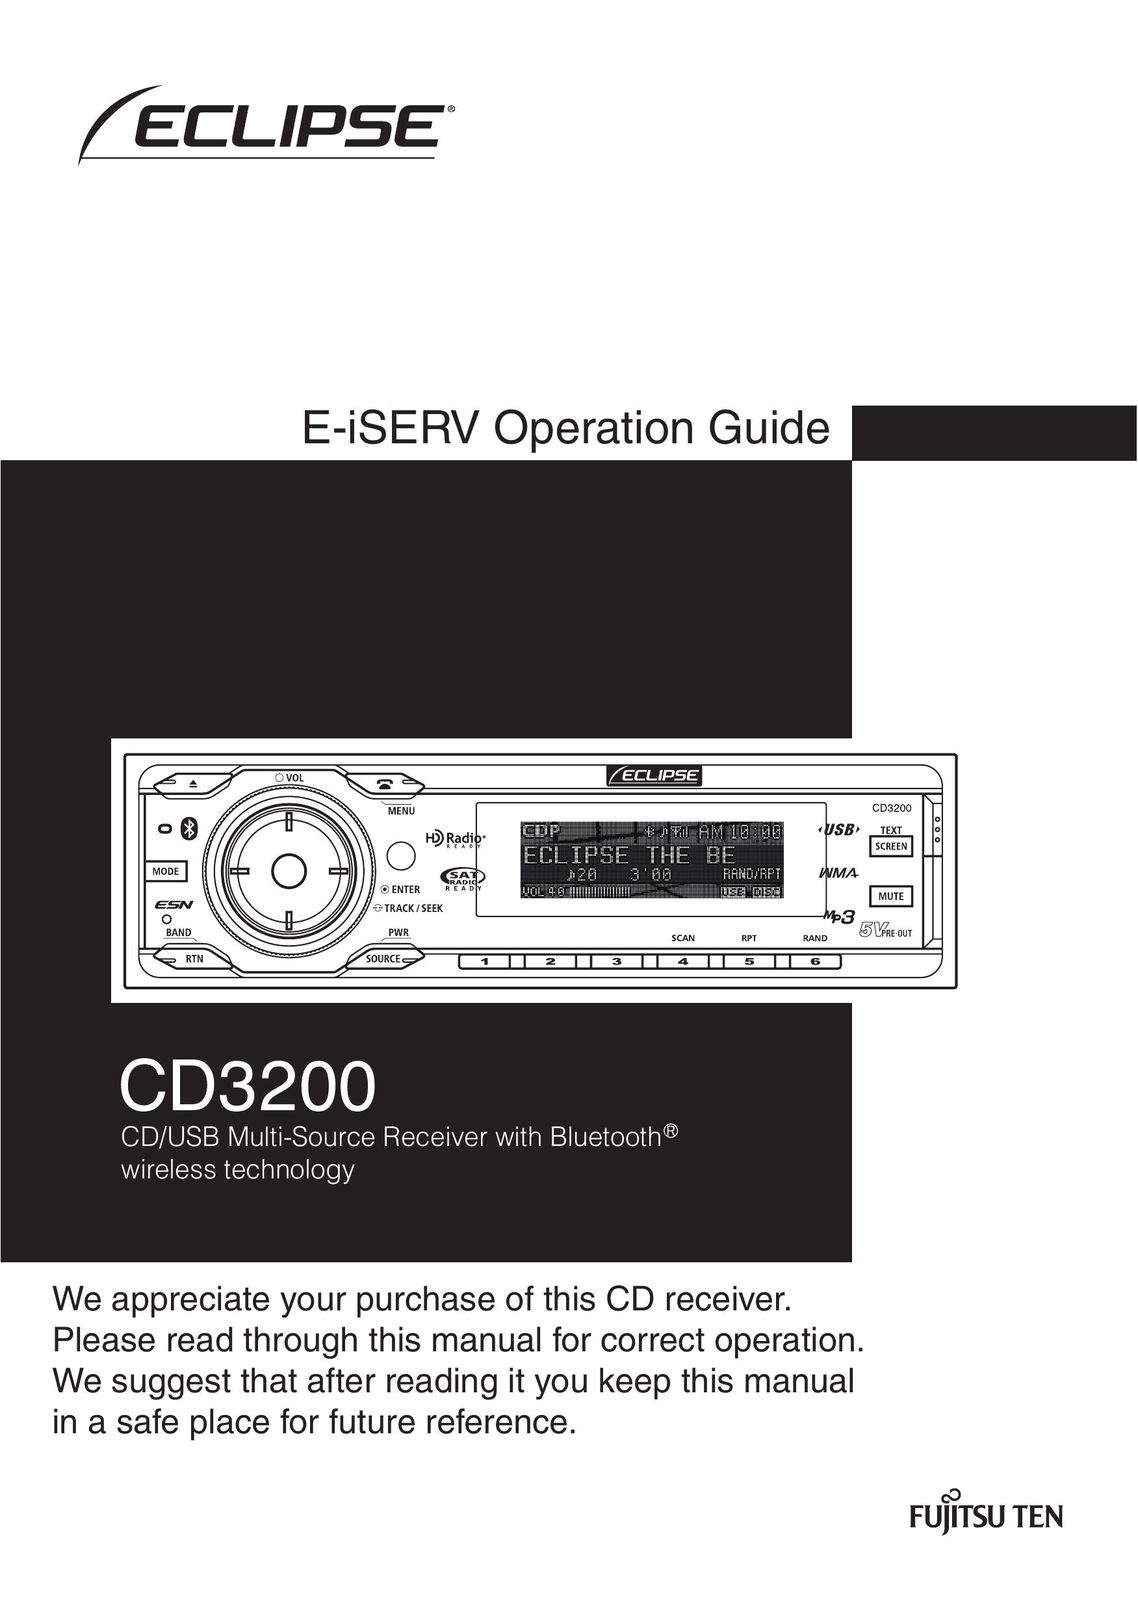 Eclipse - Fujitsu Ten VCD3200 Car Stereo System User Manual